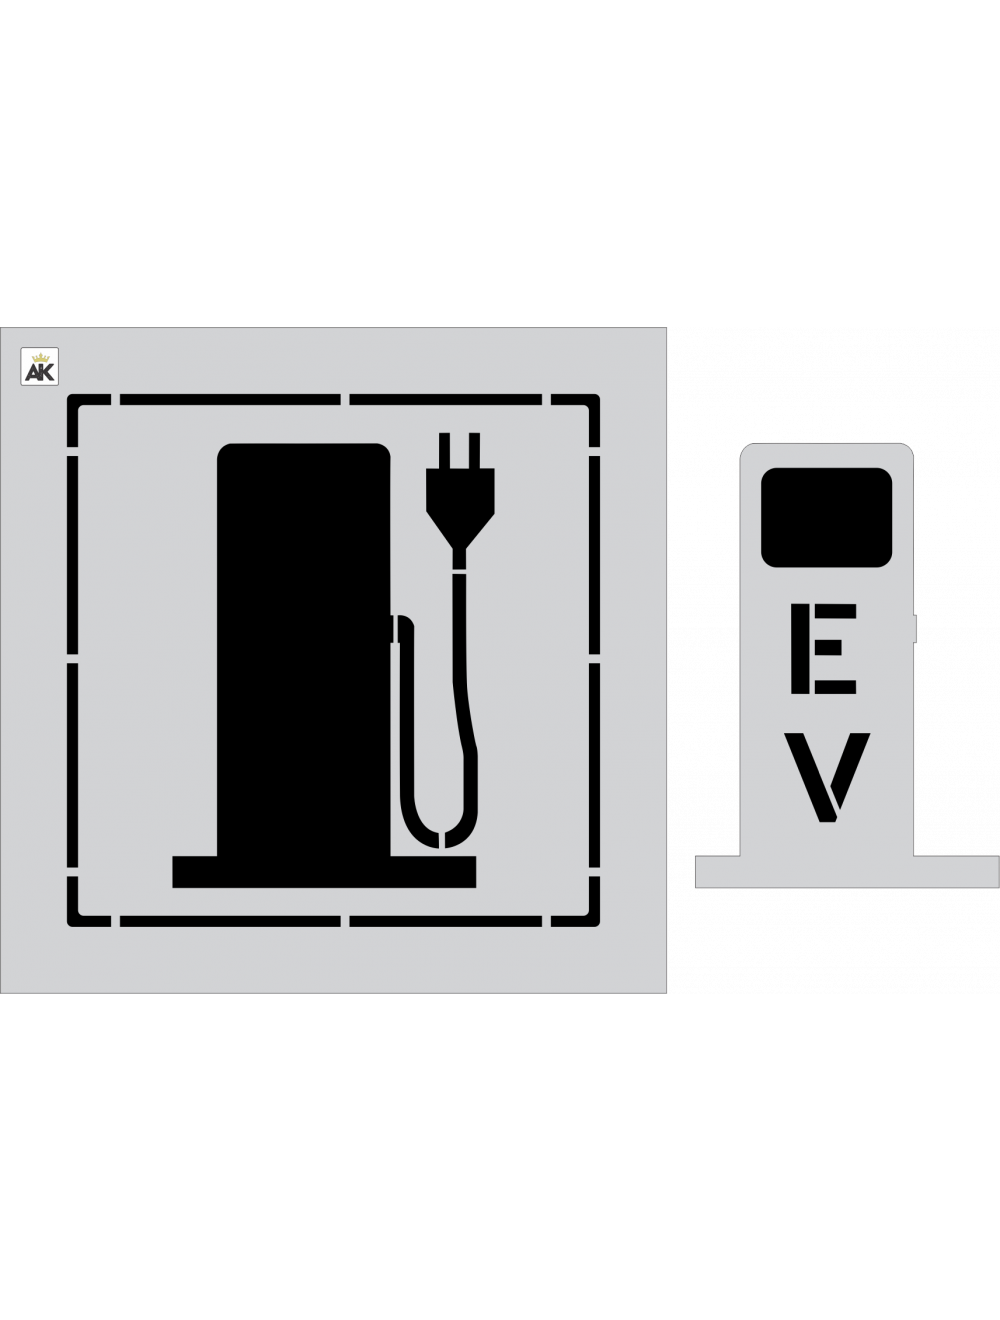 36" EV Electric Charging Station Stencil